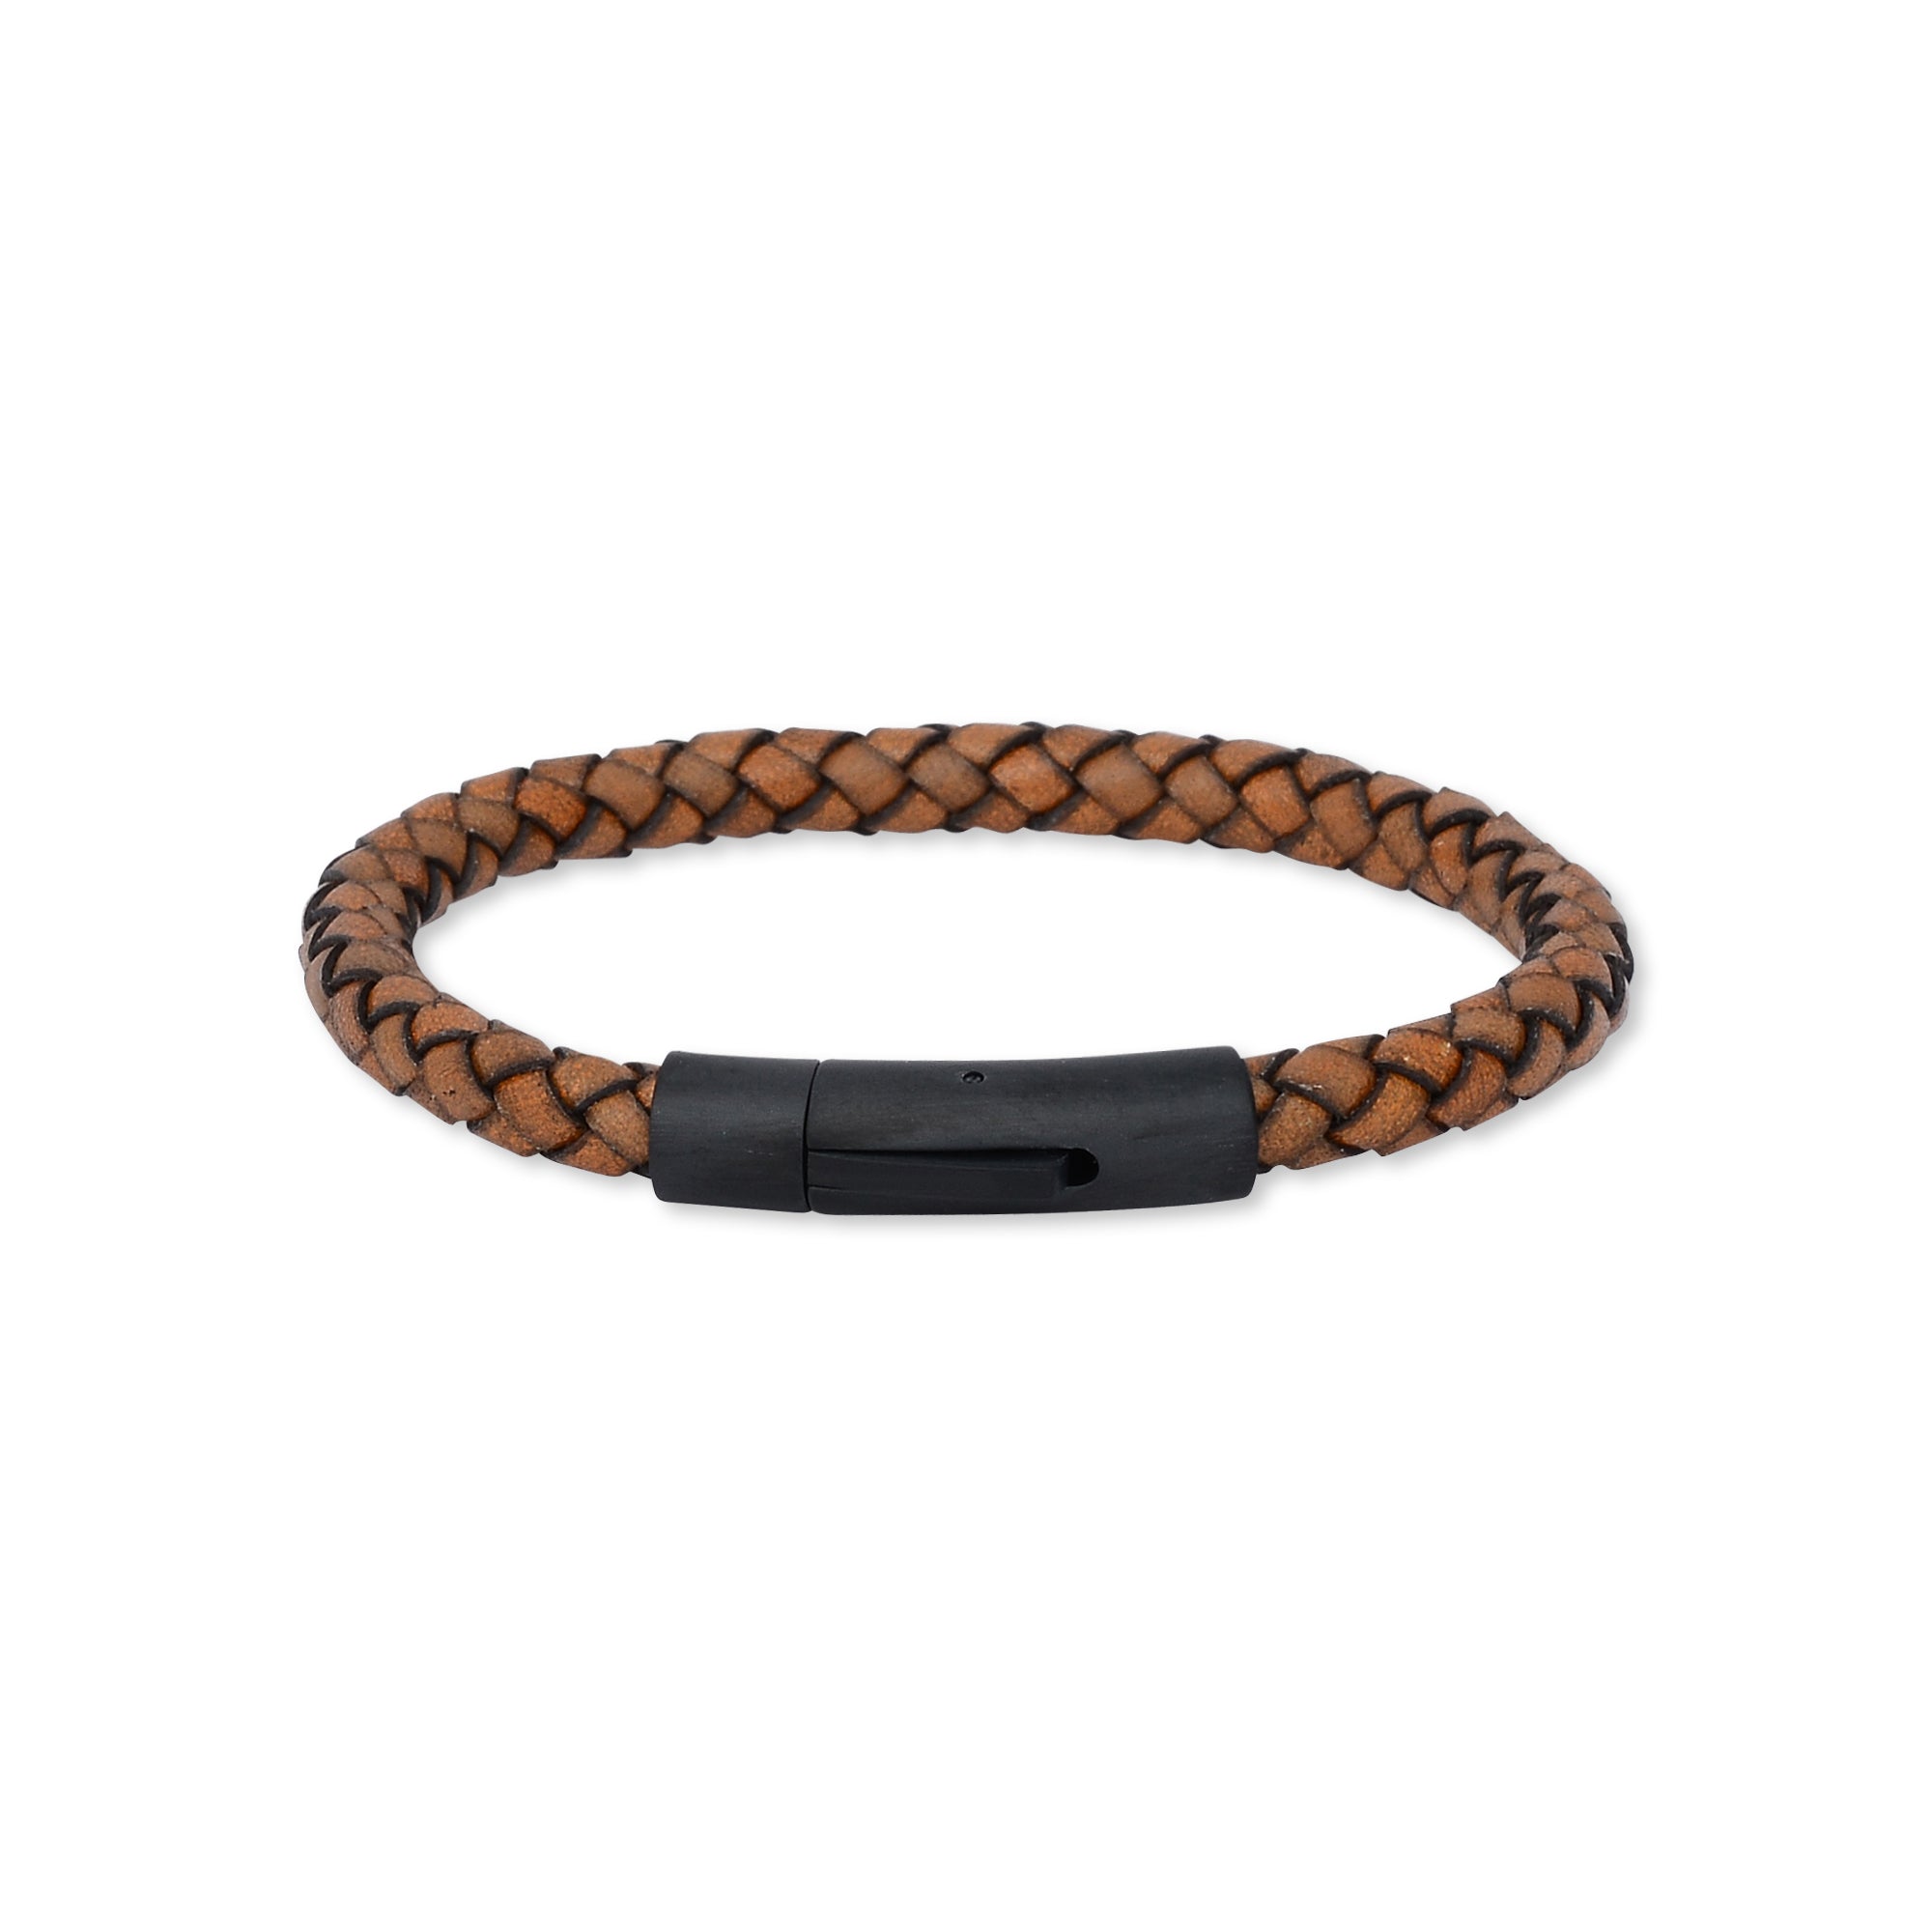 Tan Weave Stainless Steel Leather Bracelet